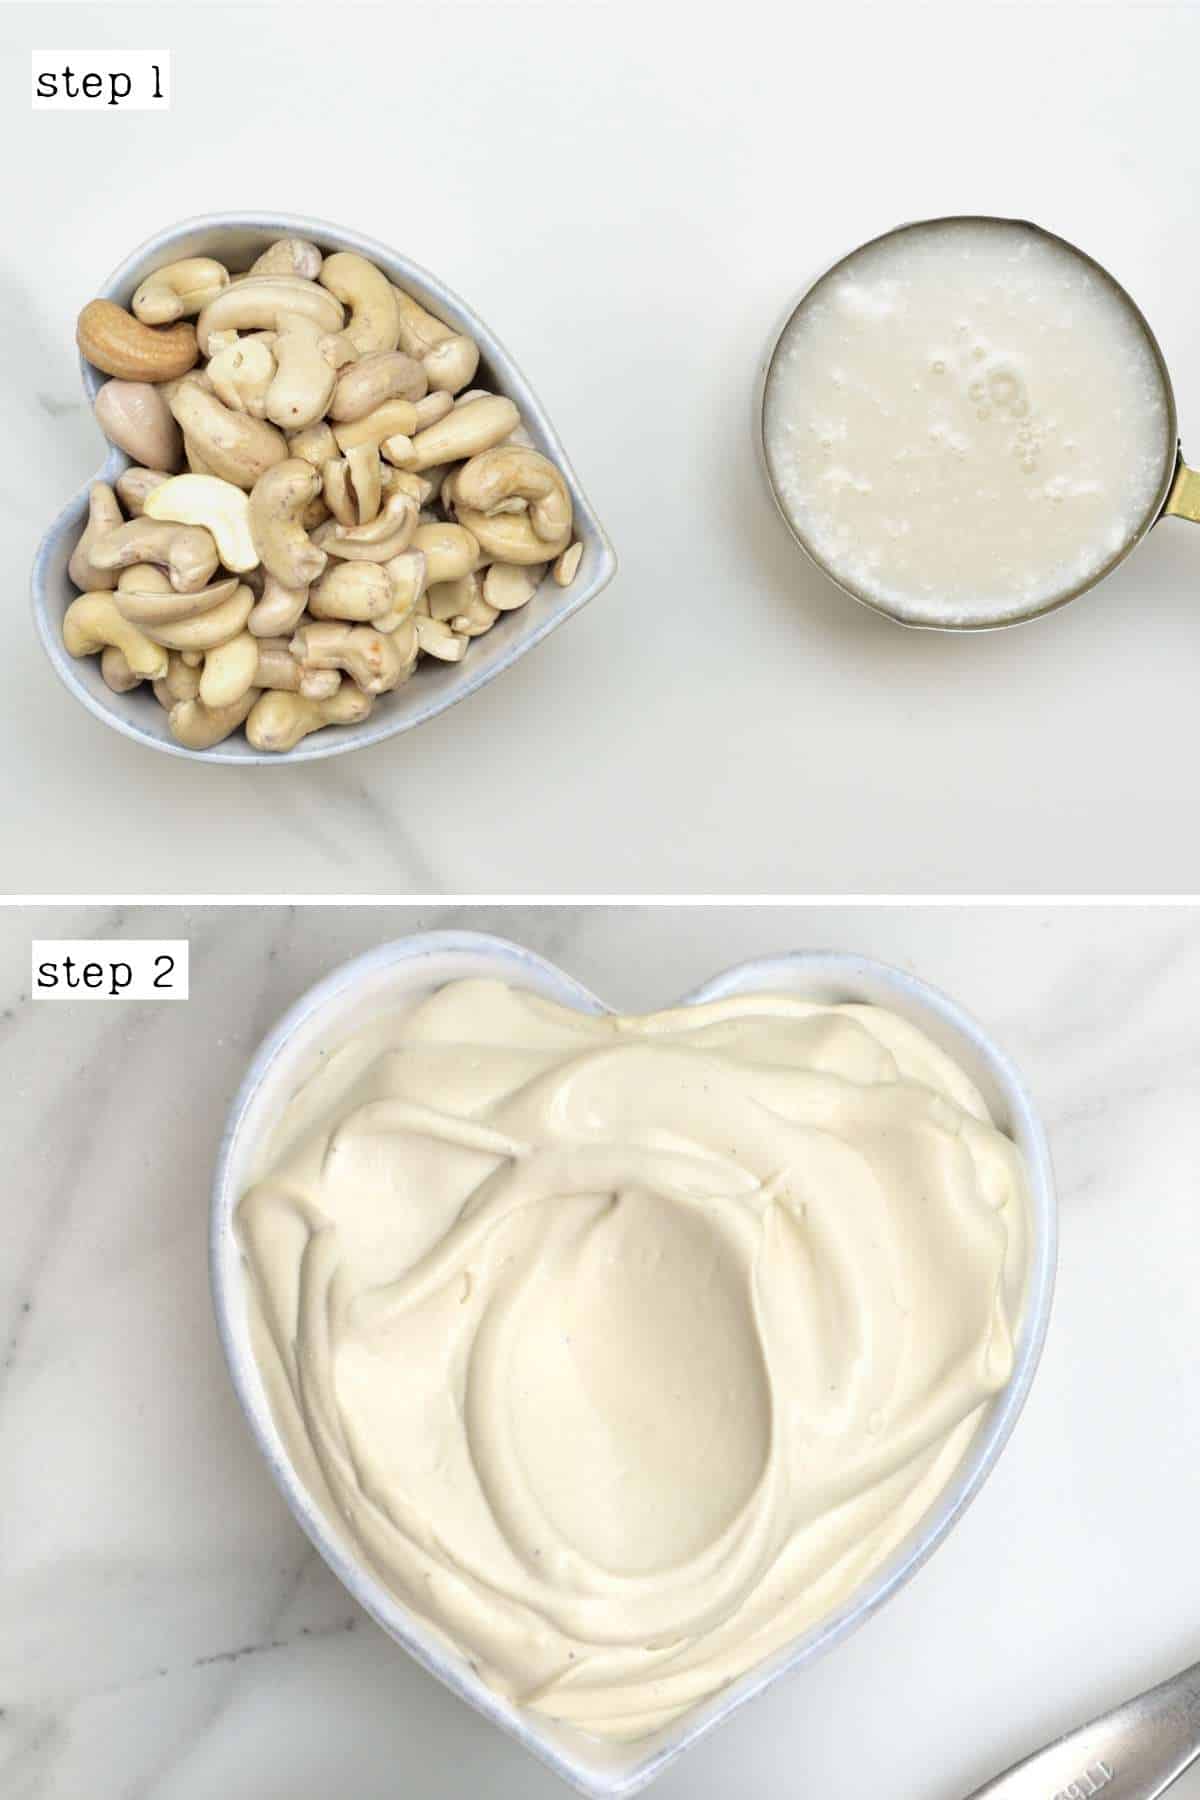 Steps for making cashew cream